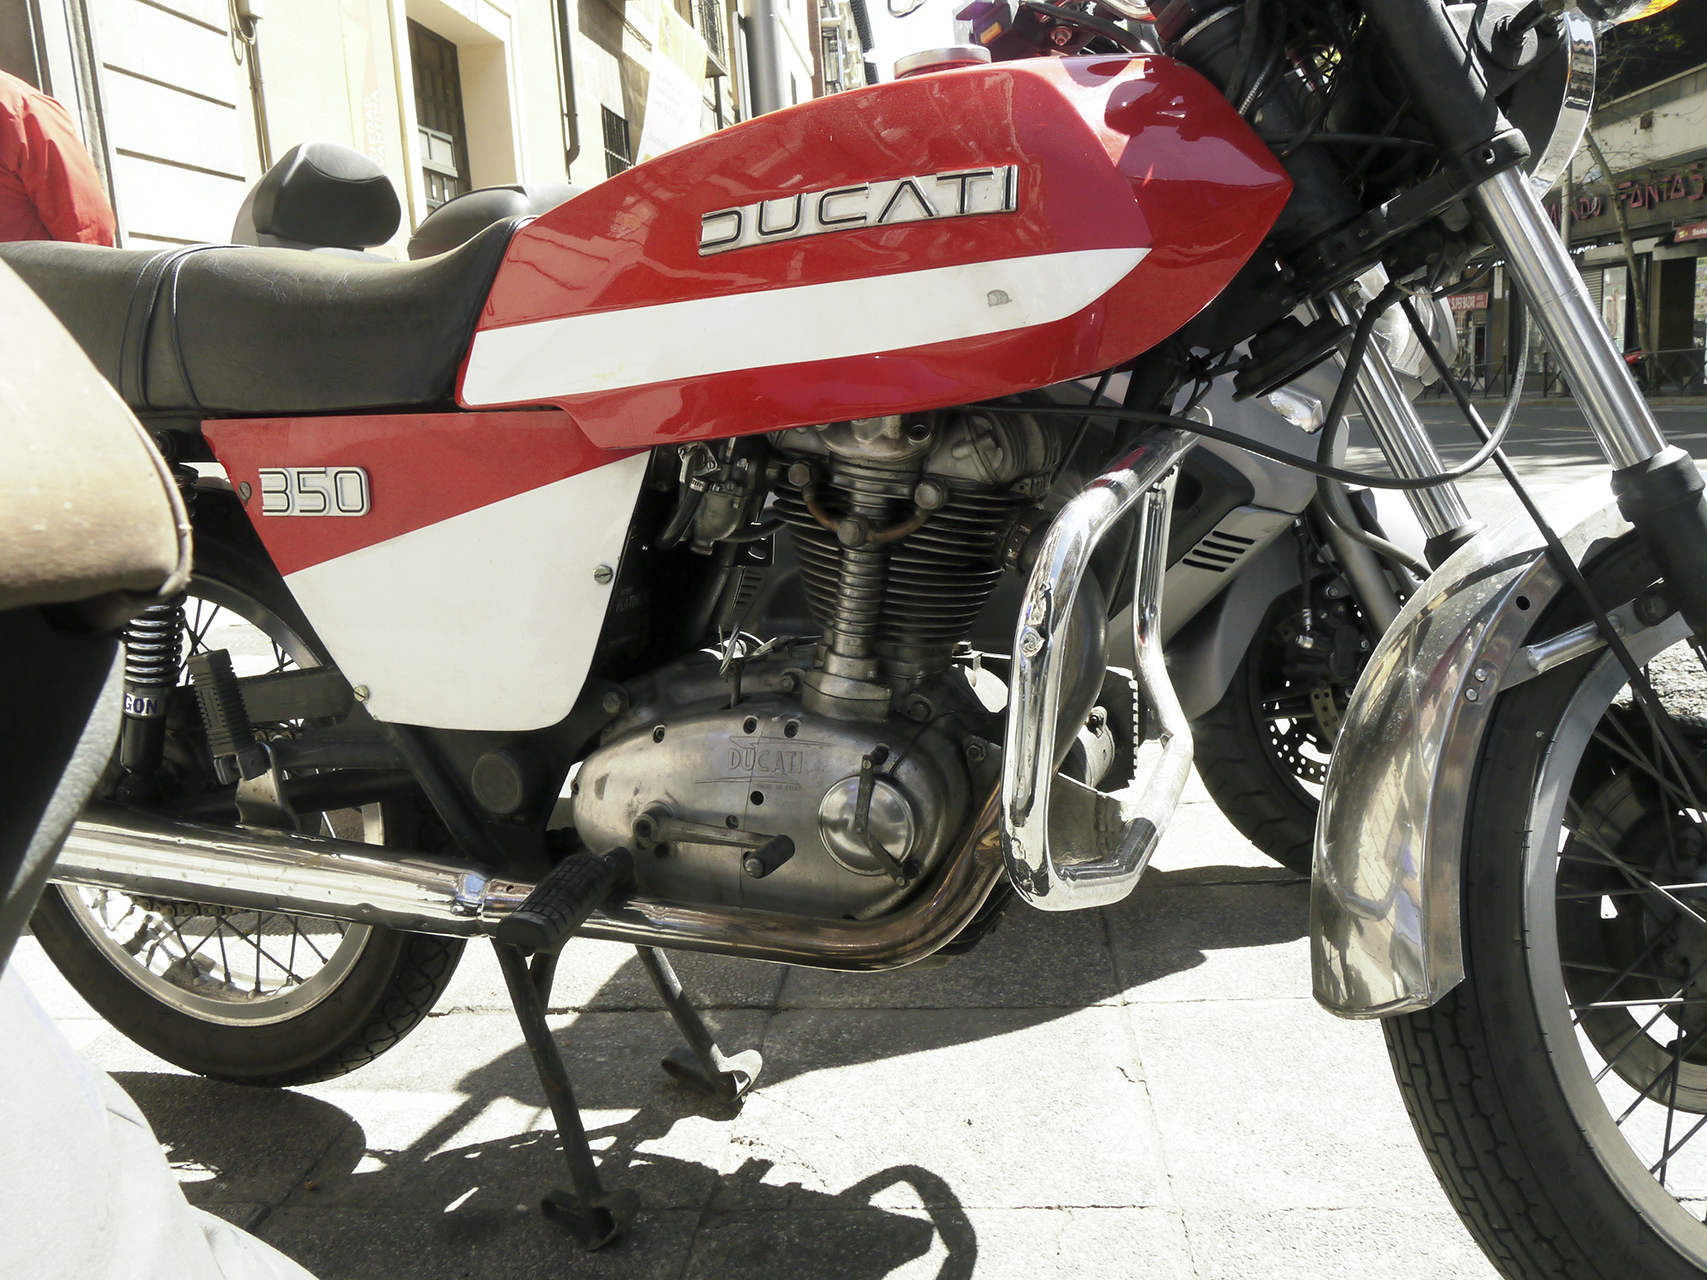  Fantastic vintage Ducati 350 Desmo. A model almost unknown in the States 